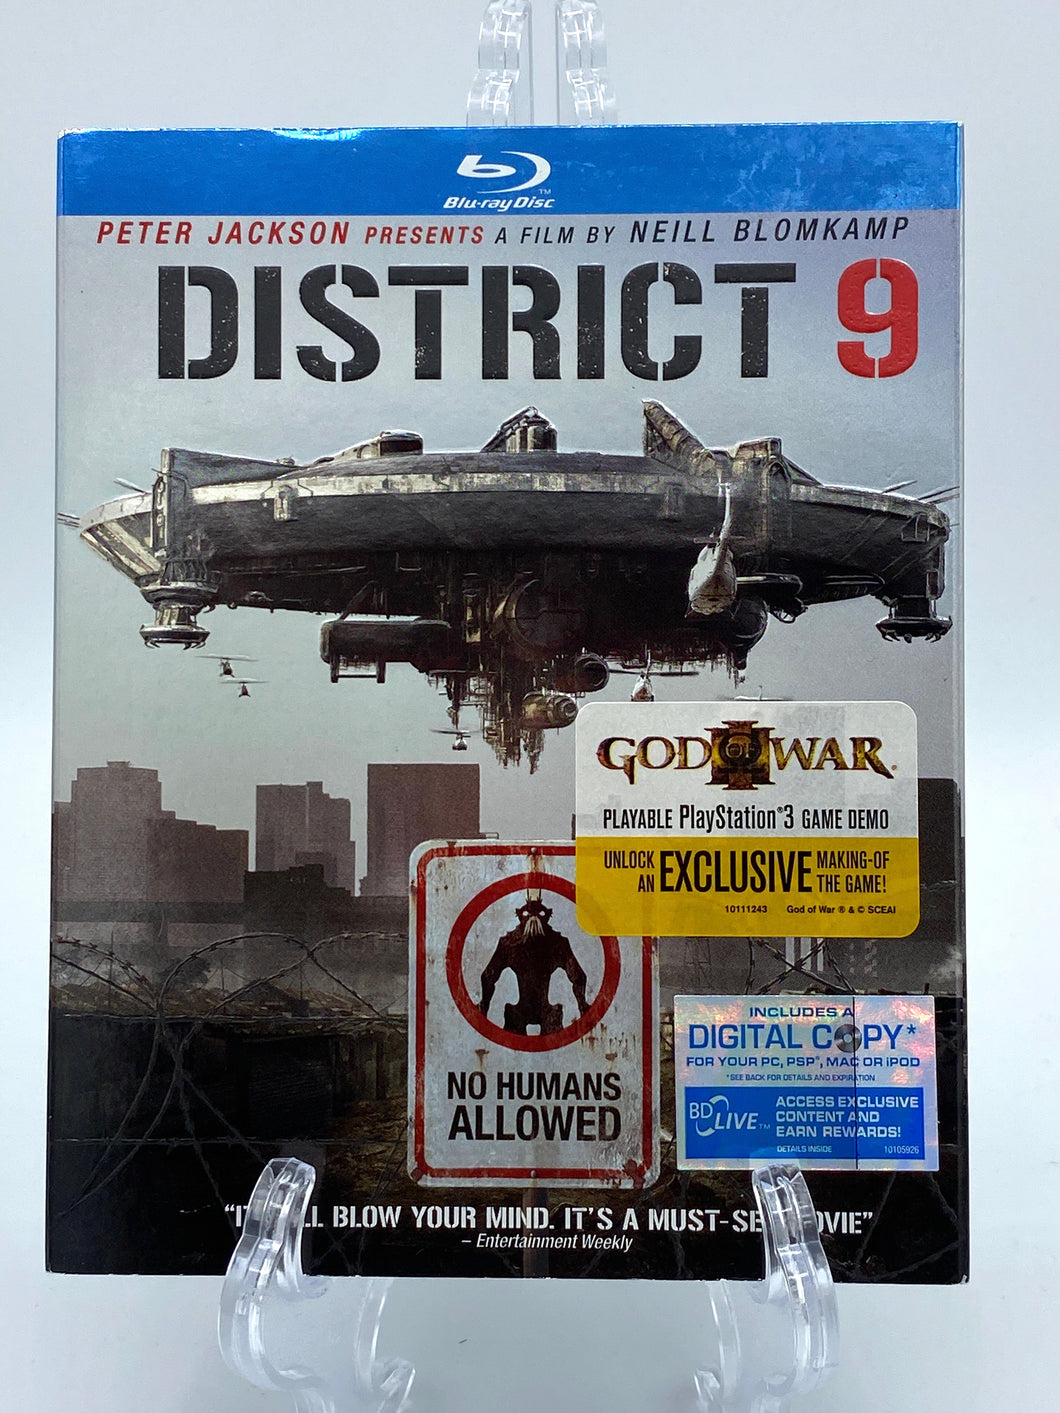 District 9 (Blu-Ray)